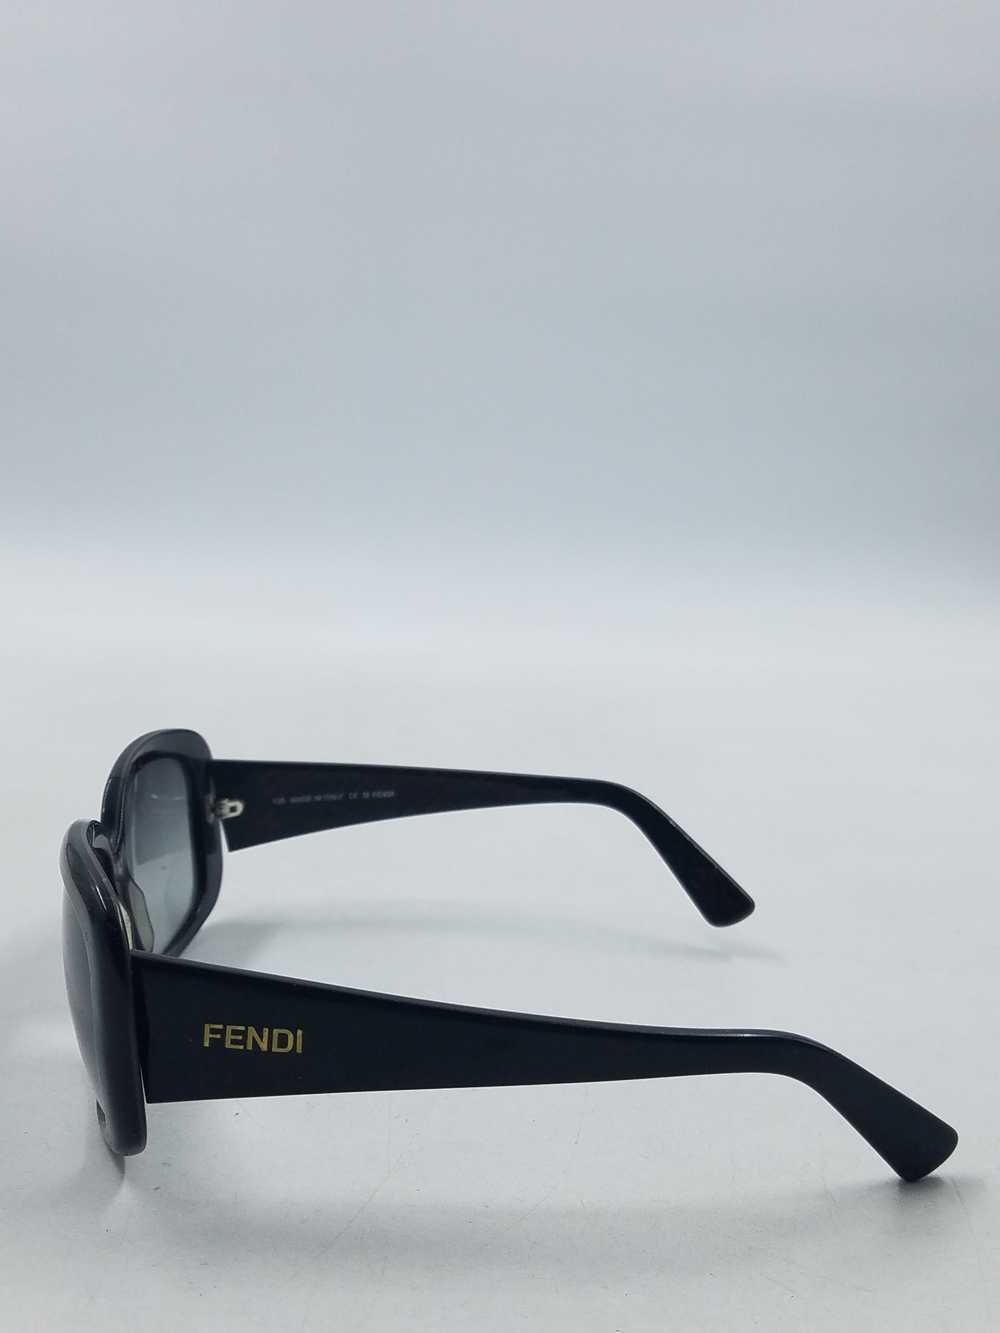 Fendi Black Tinted Square Sunglasses - image 4